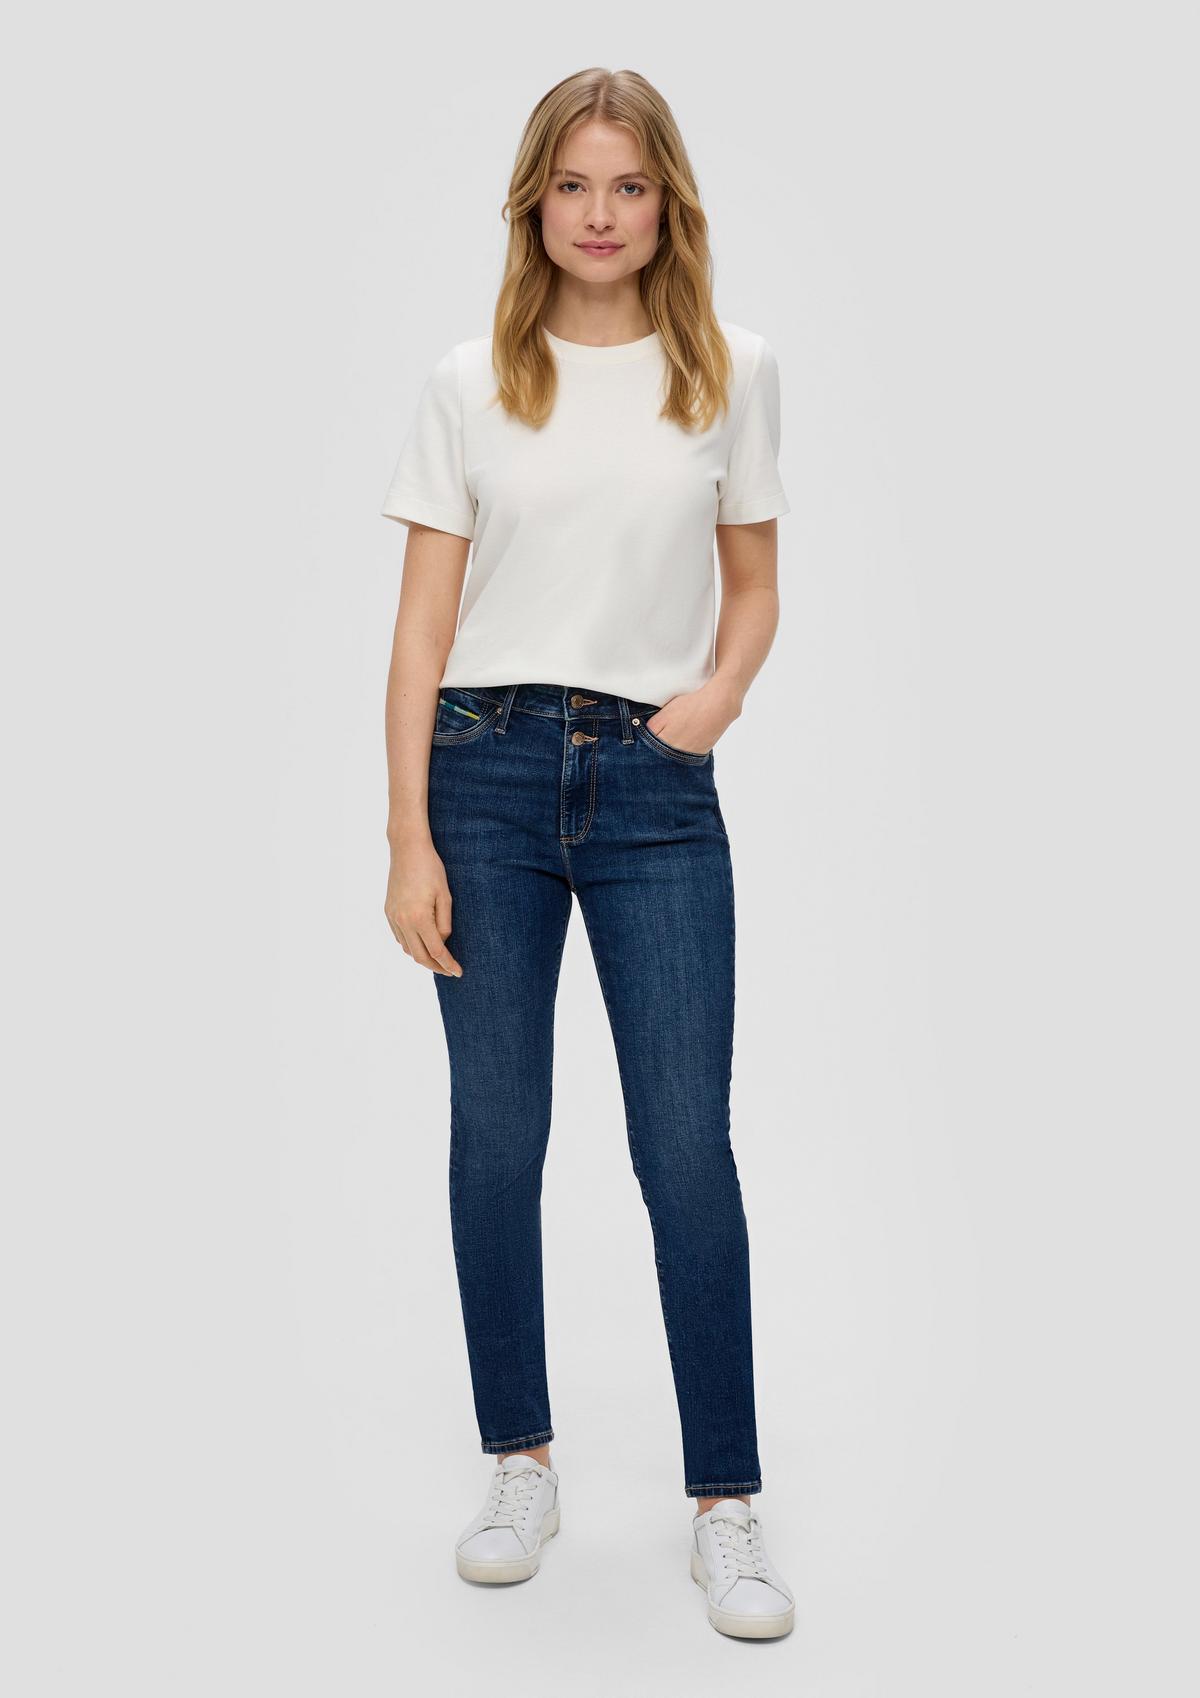 s.Oliver Izabell jeans / skinny fit / high rise / skinny leg